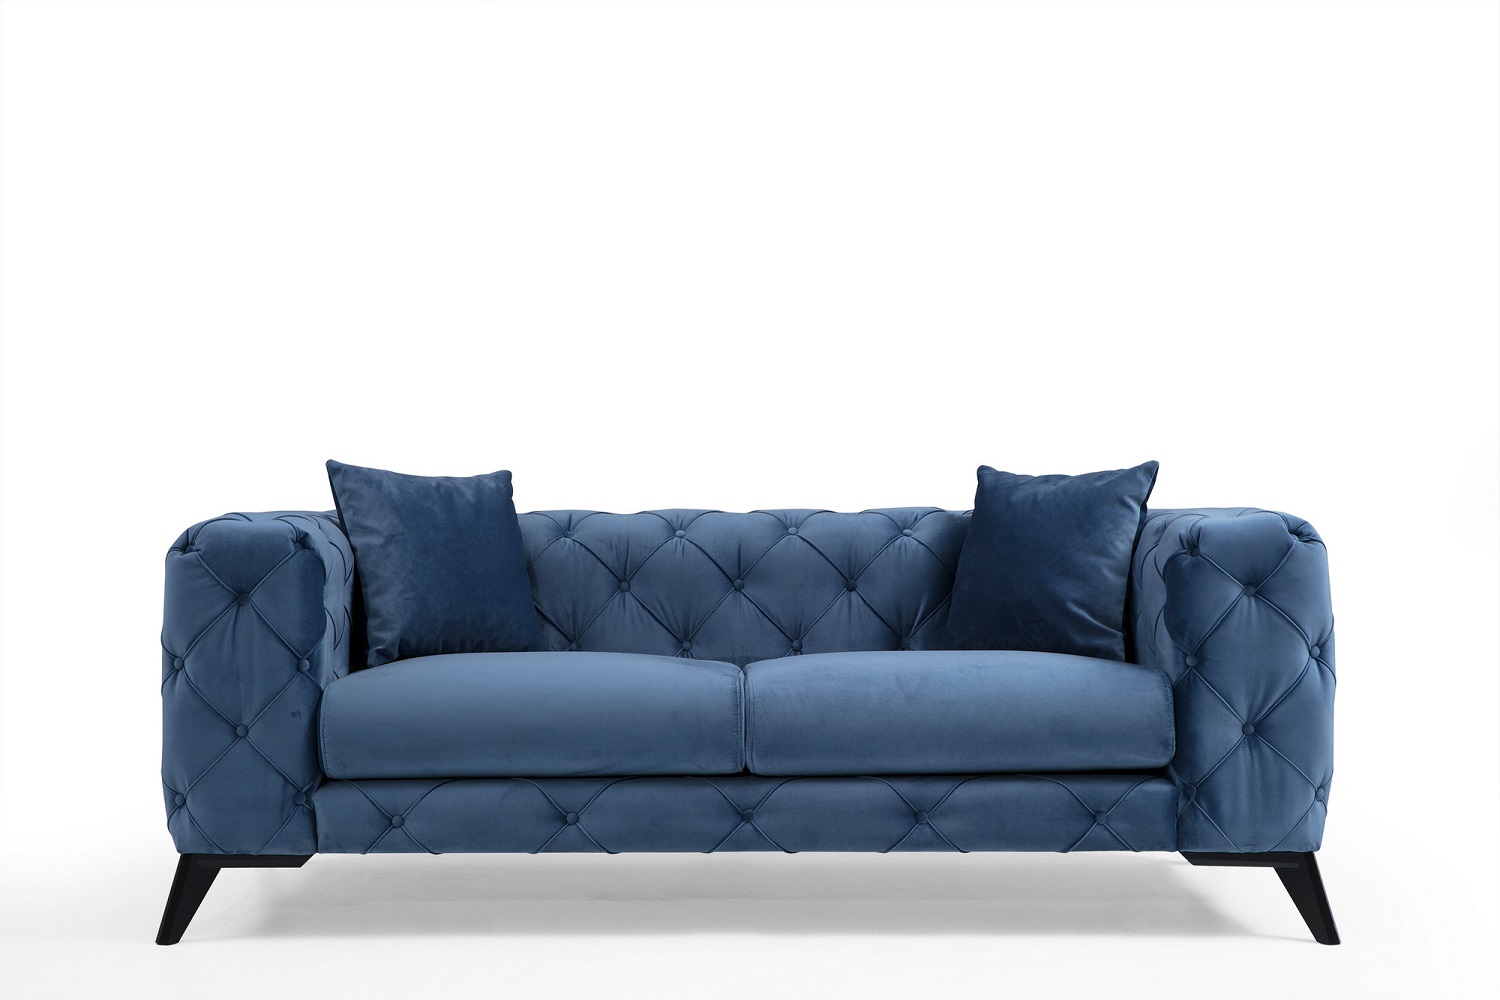 dizajnova-sedacka-rococo-197-cm-modra-1